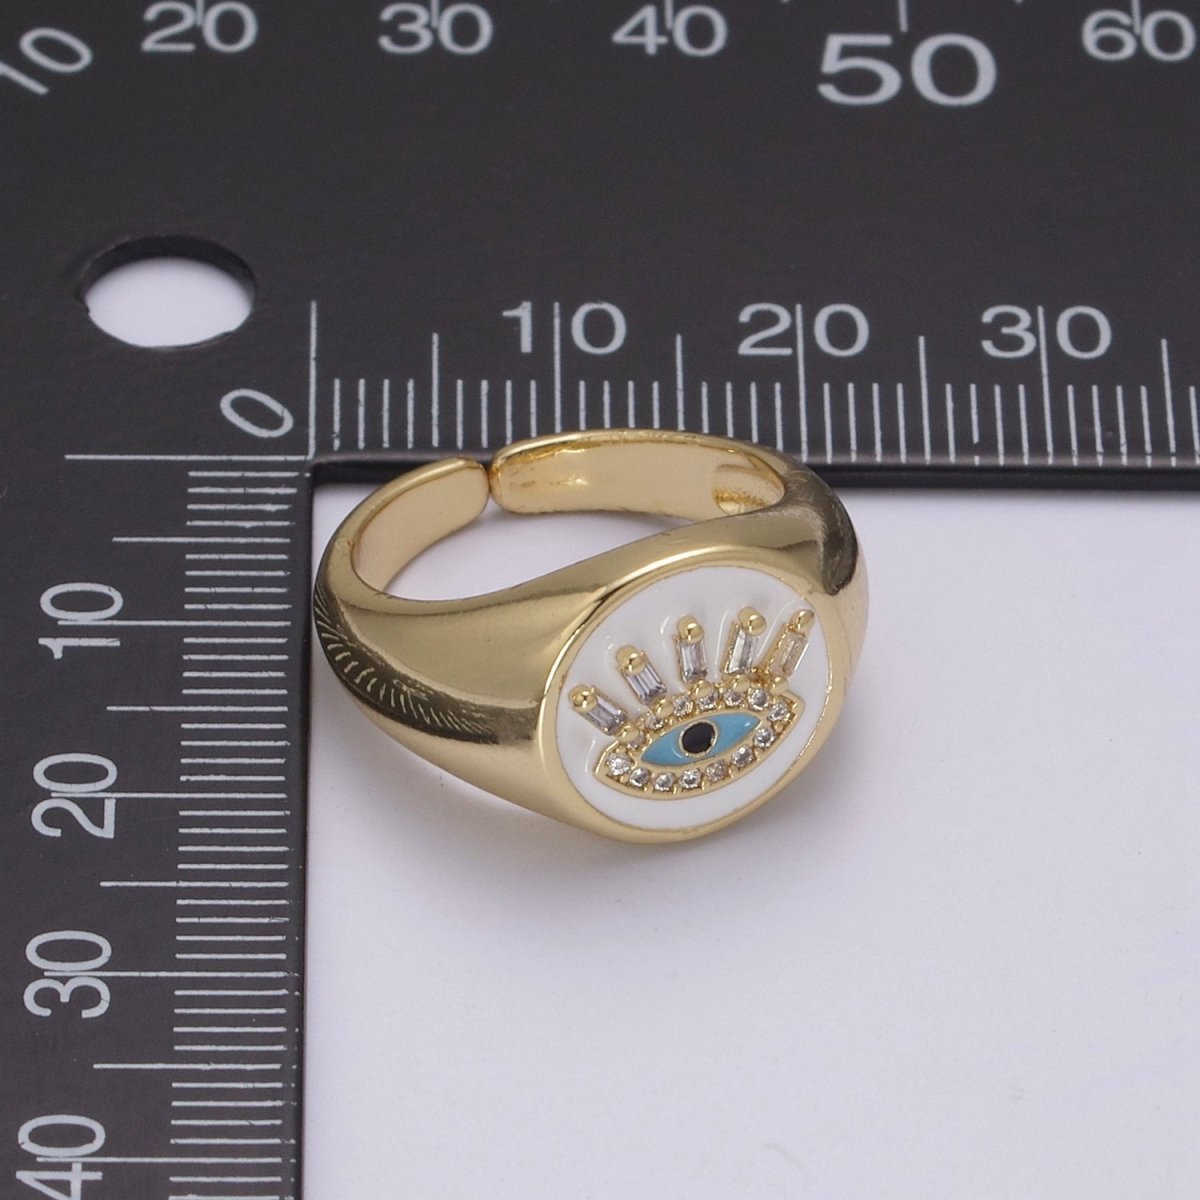 White Dome Evil Eye Ring, Protection Ring, Cubic Zirconia Eye Ring Amulet Boho Statement Jewelry U-201 ~ U-206 - DLUXCA